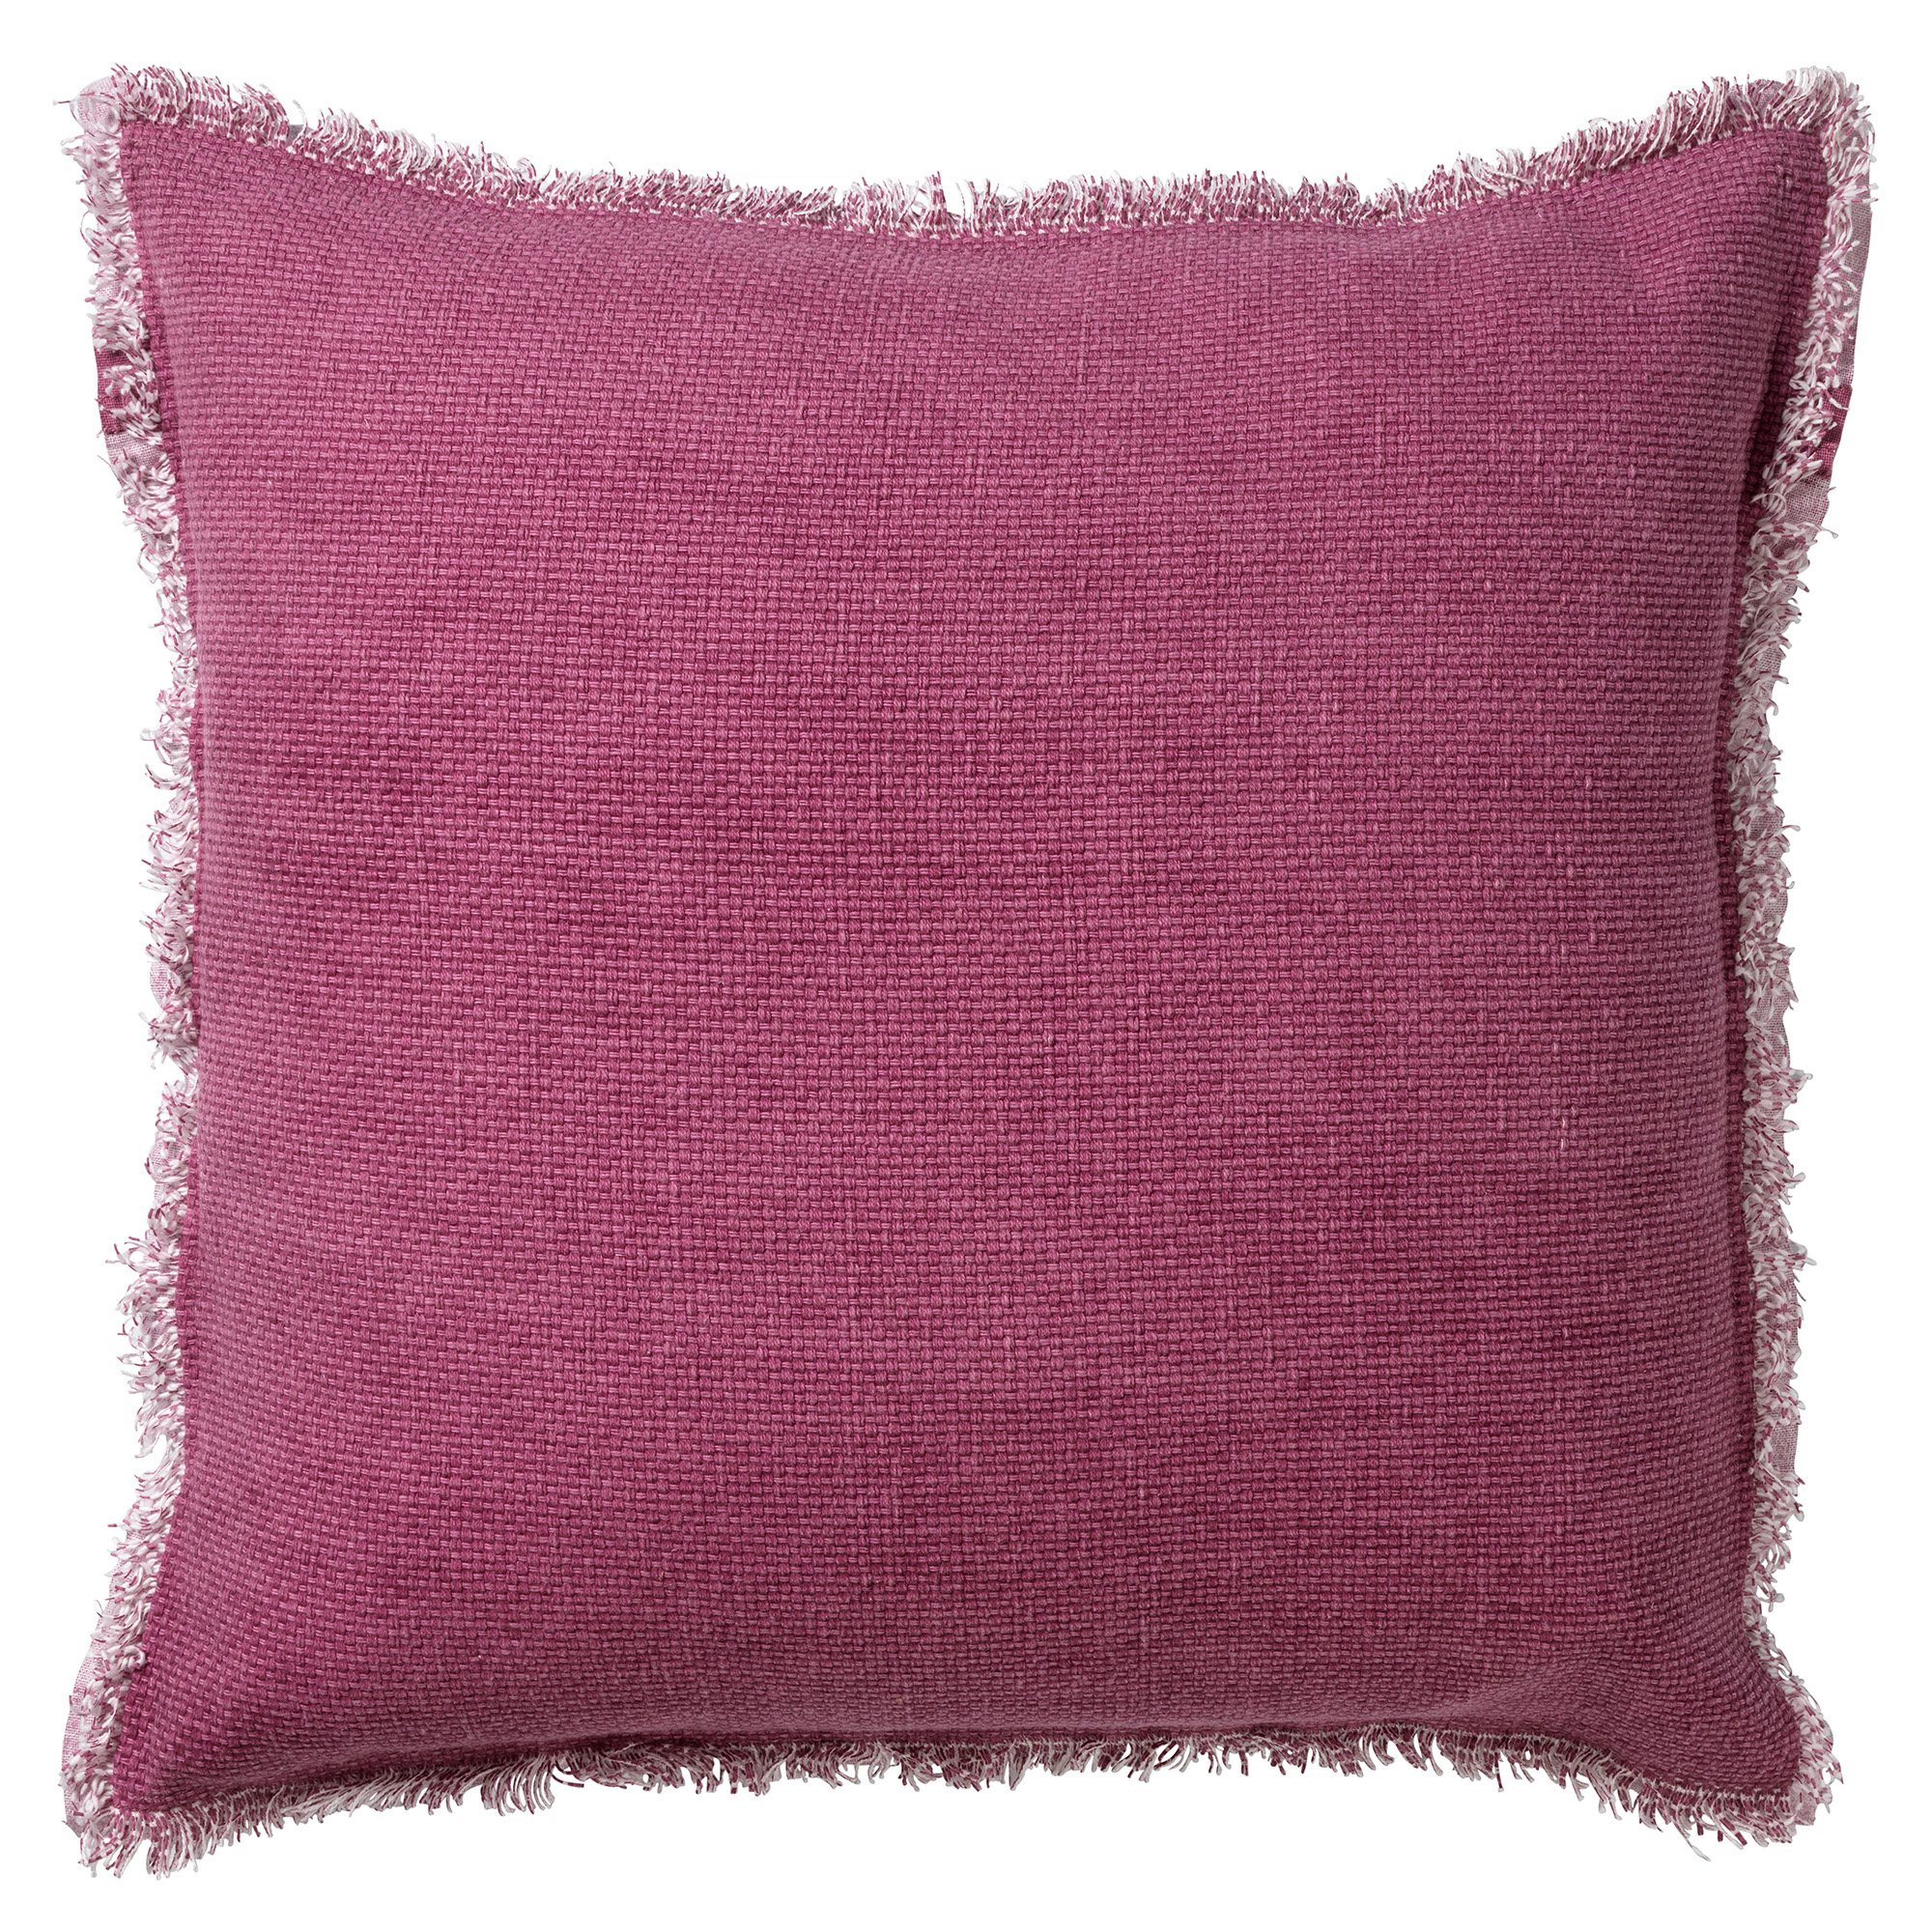 BURTO - Cushion 45x45 cm Heather Rose - pink